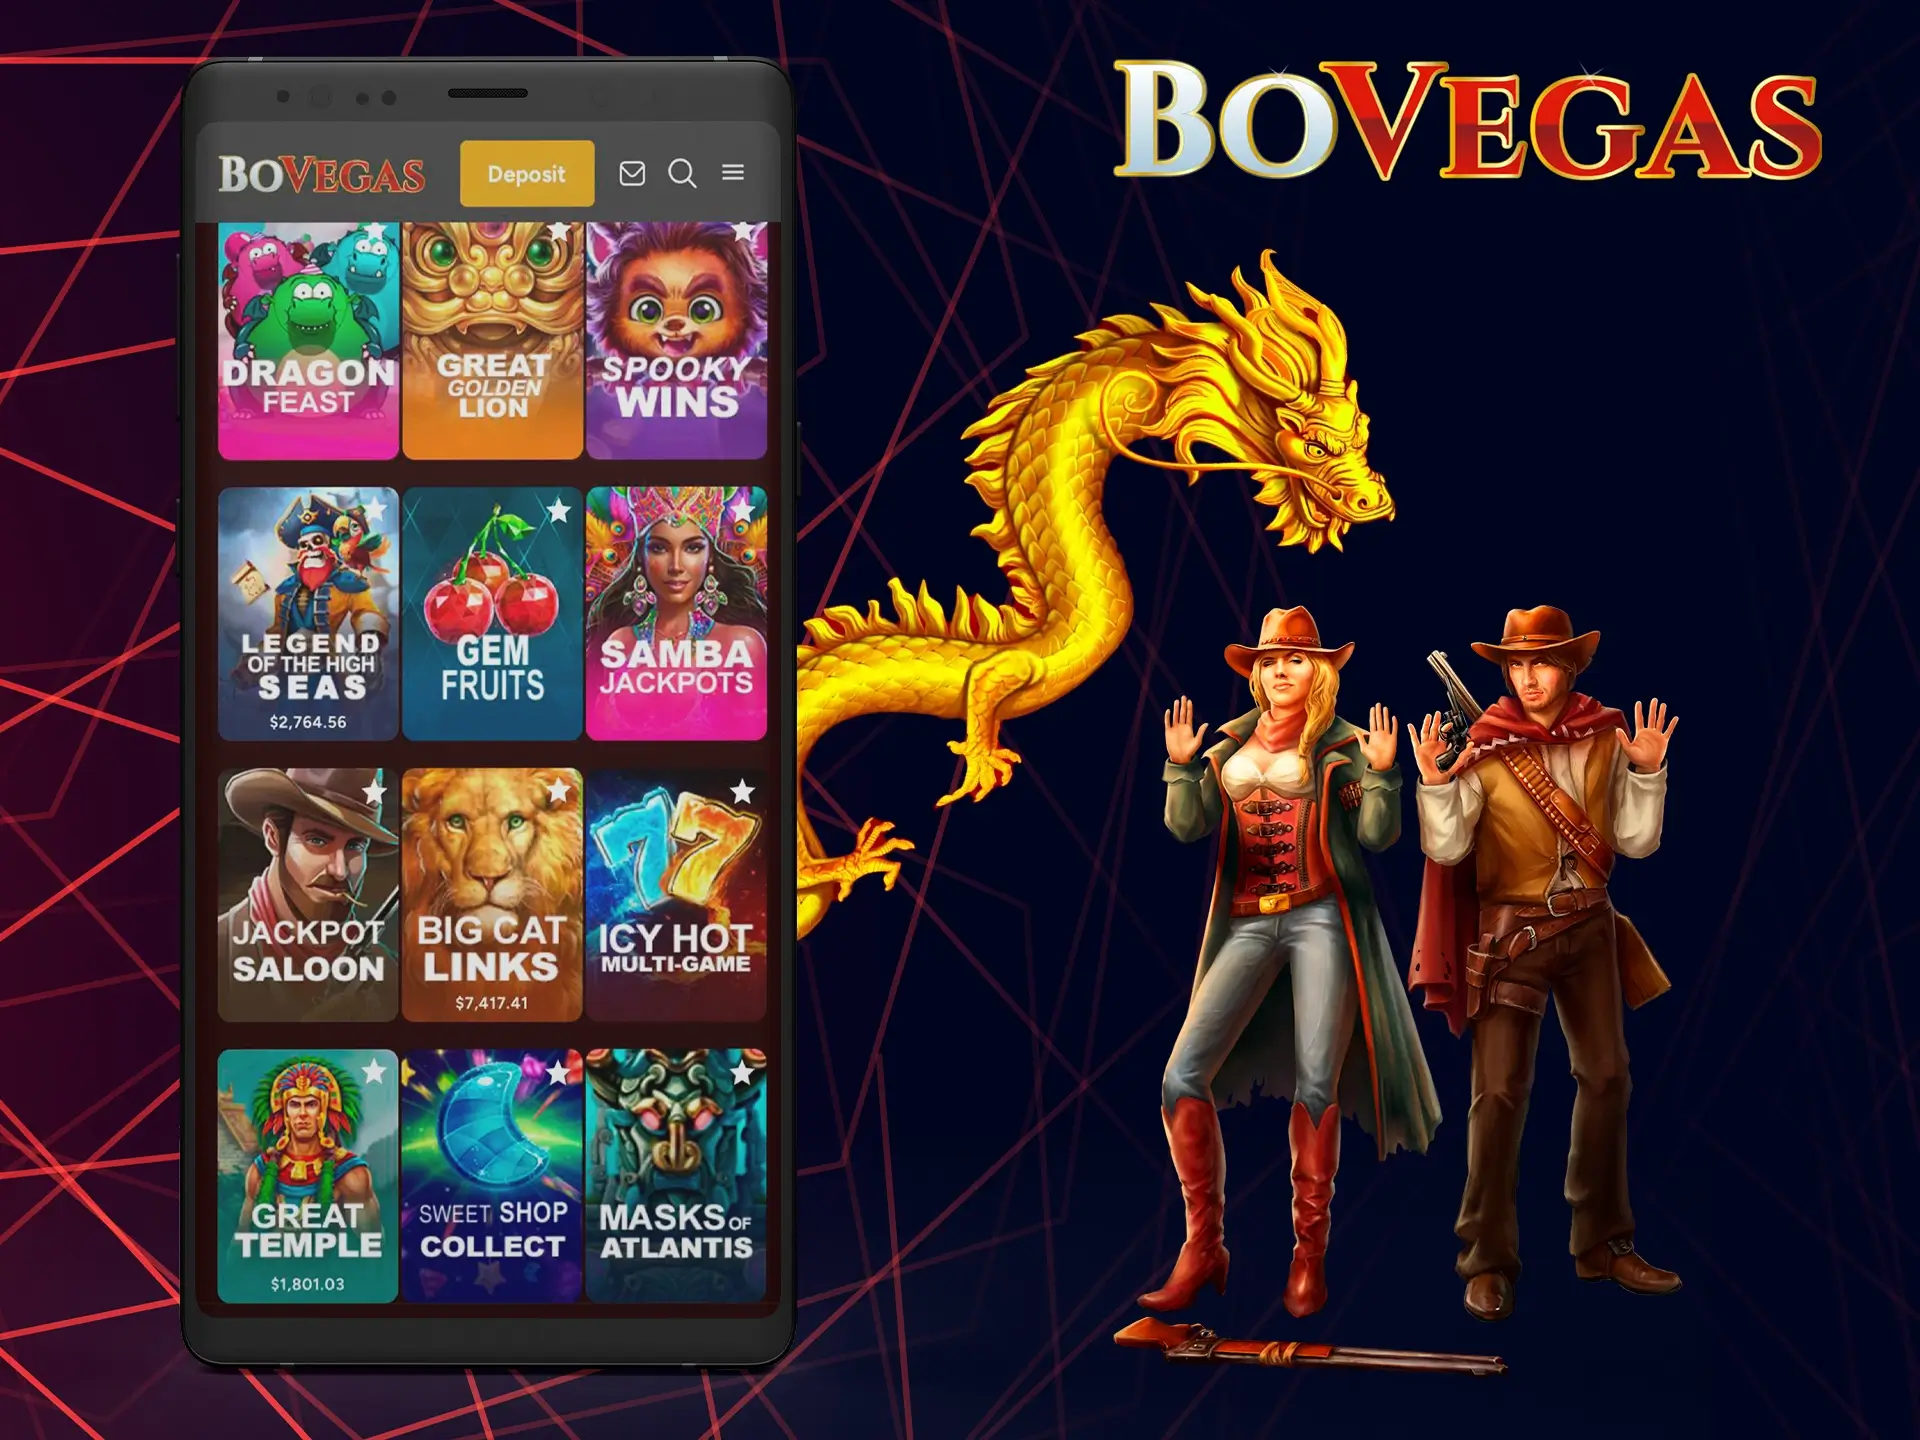 You can play slot games through the BoVegas casino mobile version.